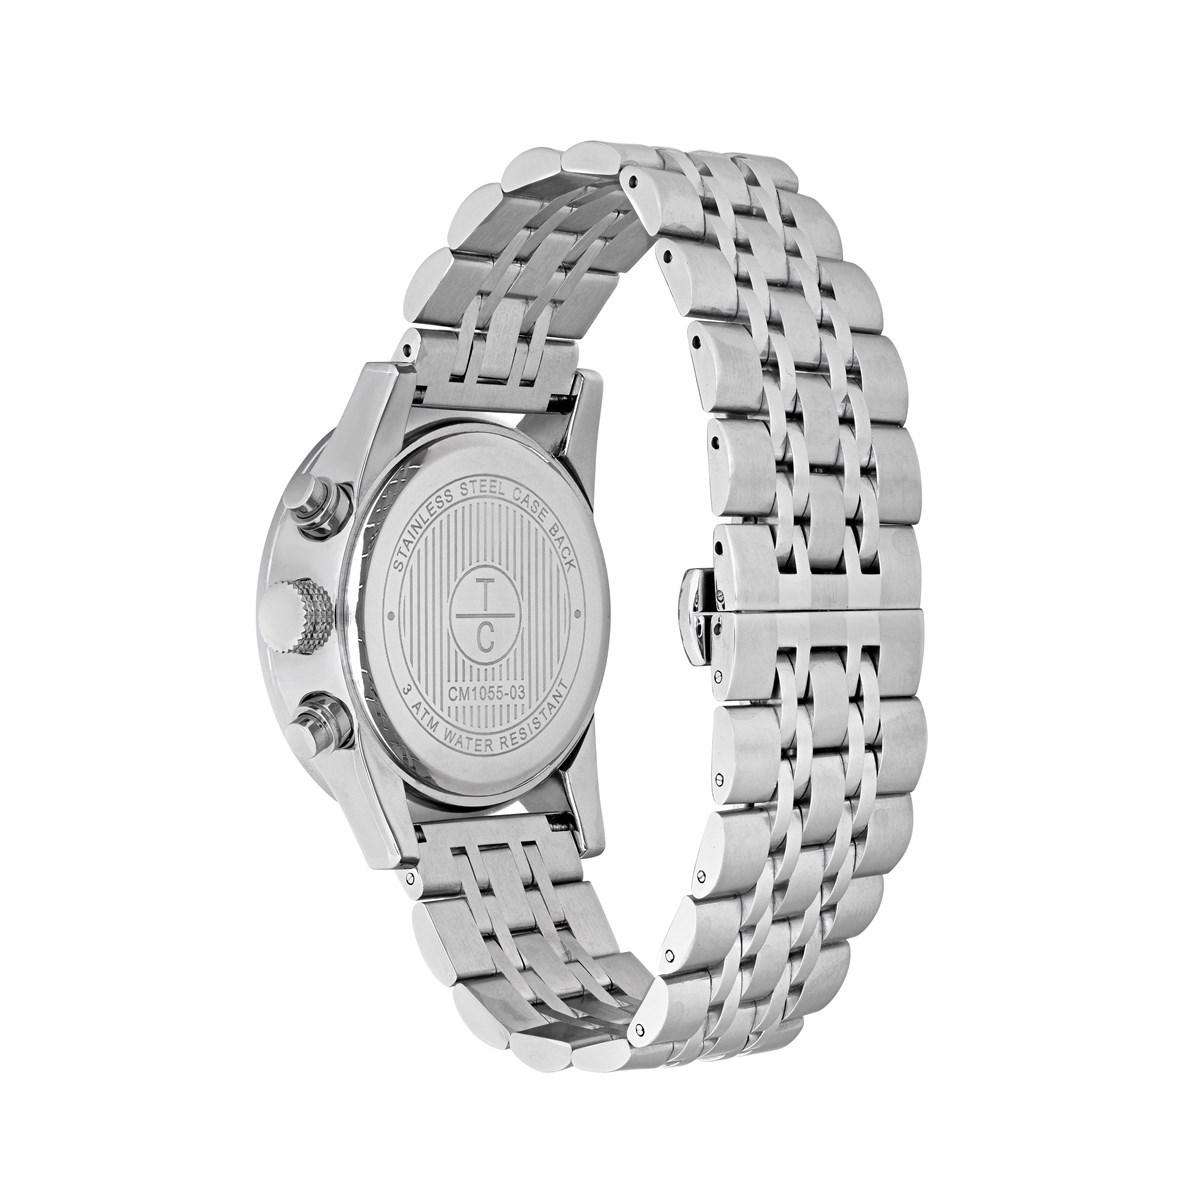 Montre chronographe bracelet acier inoxydable MASTER - vue 3